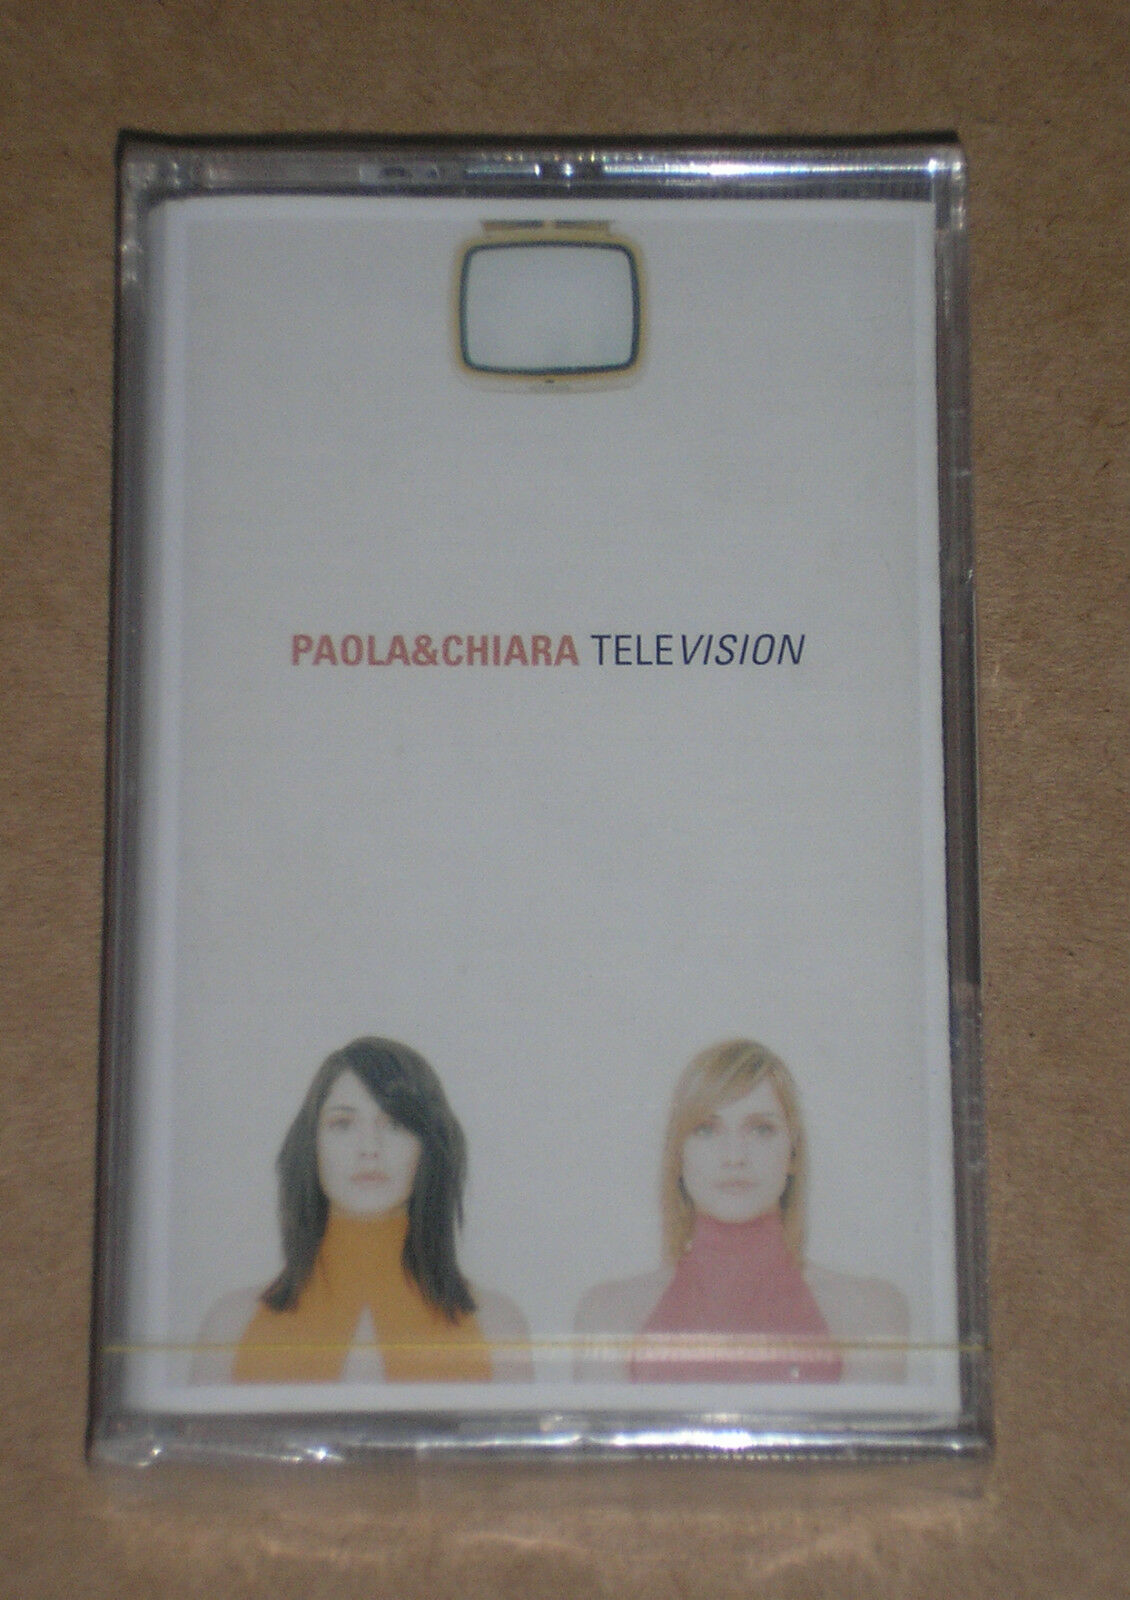 Paola & Chiara - Television